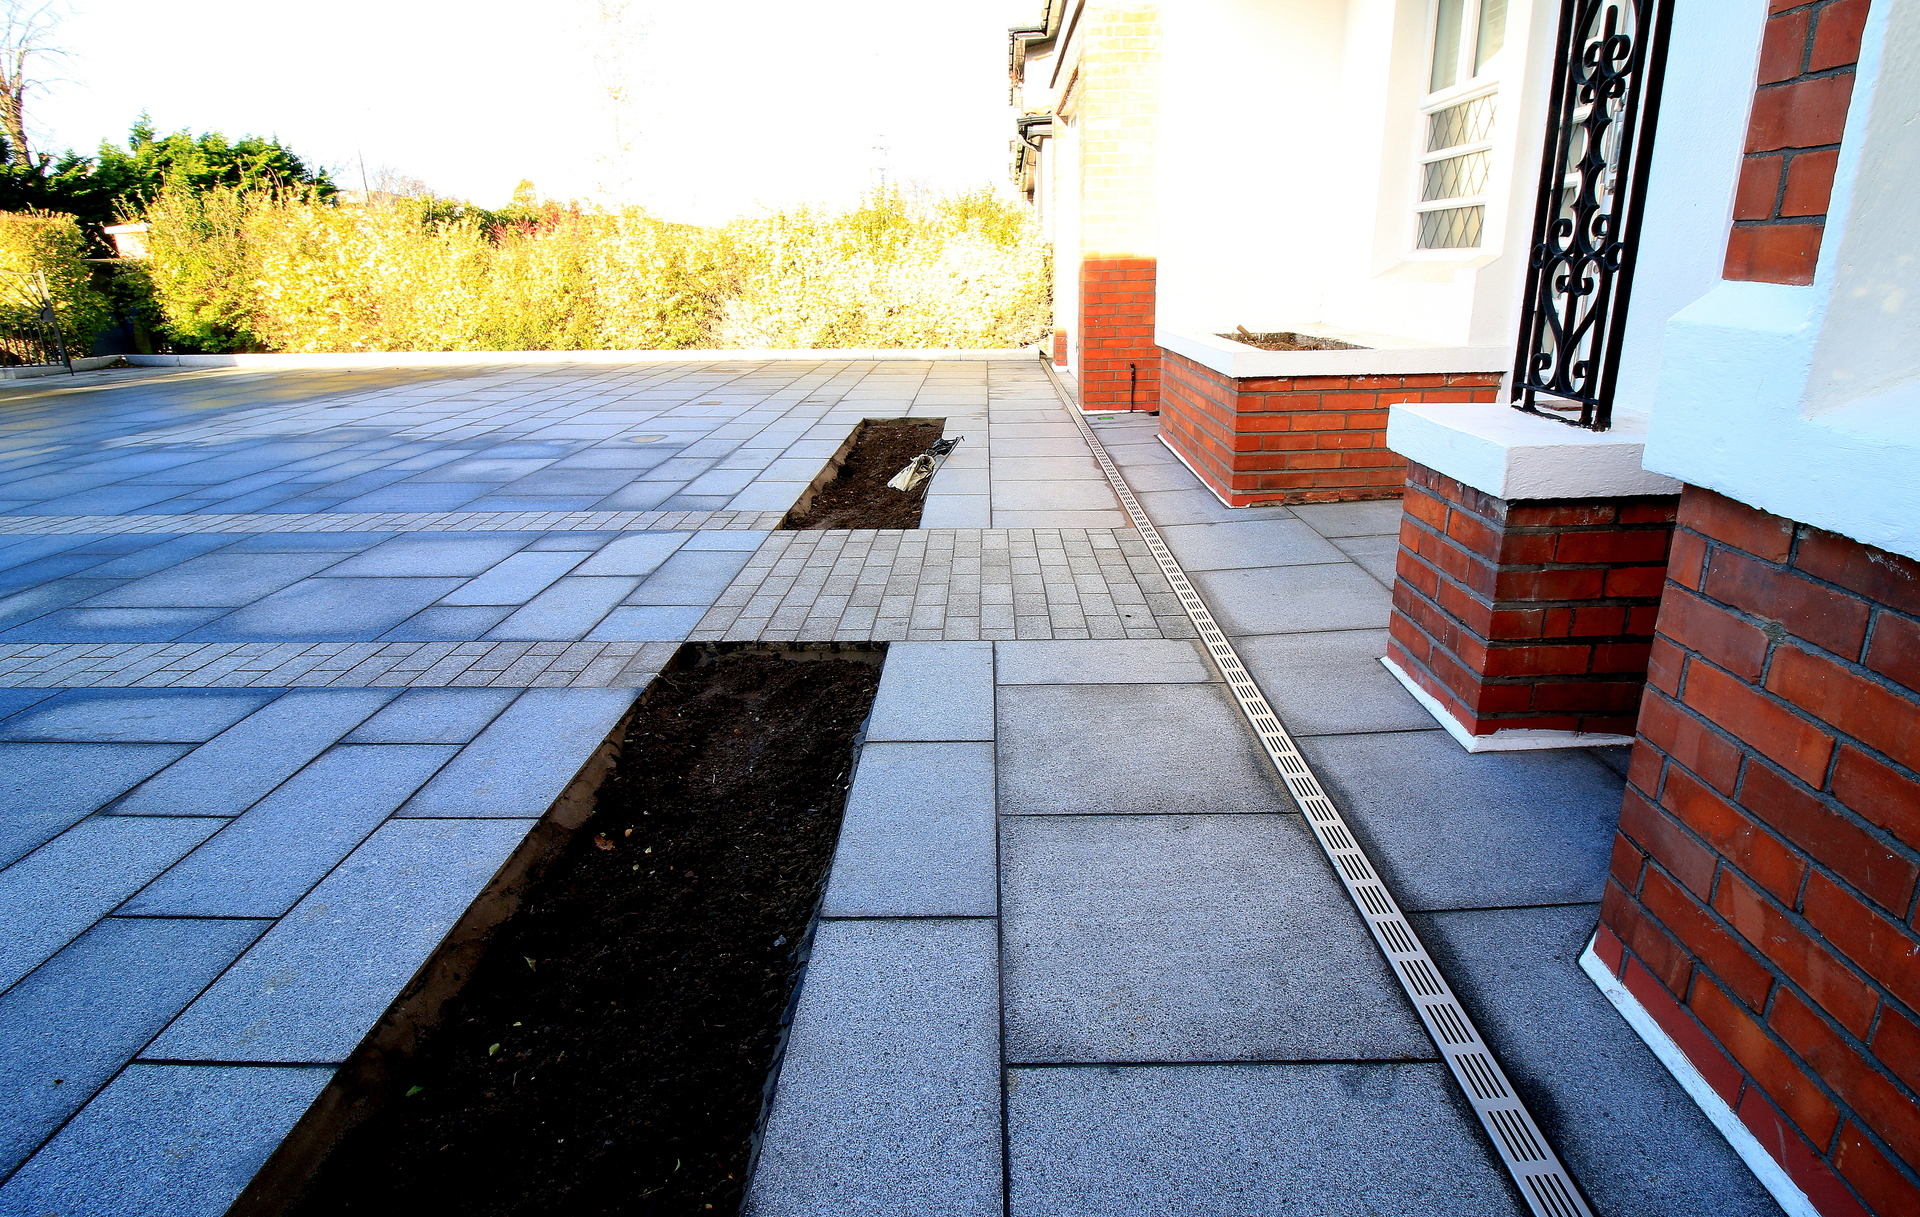 Driveway Design & Landscaping in Donnybrook, Dublin 4 in natural Granite paving I Owen Chubb Garden Designers & Landscapers